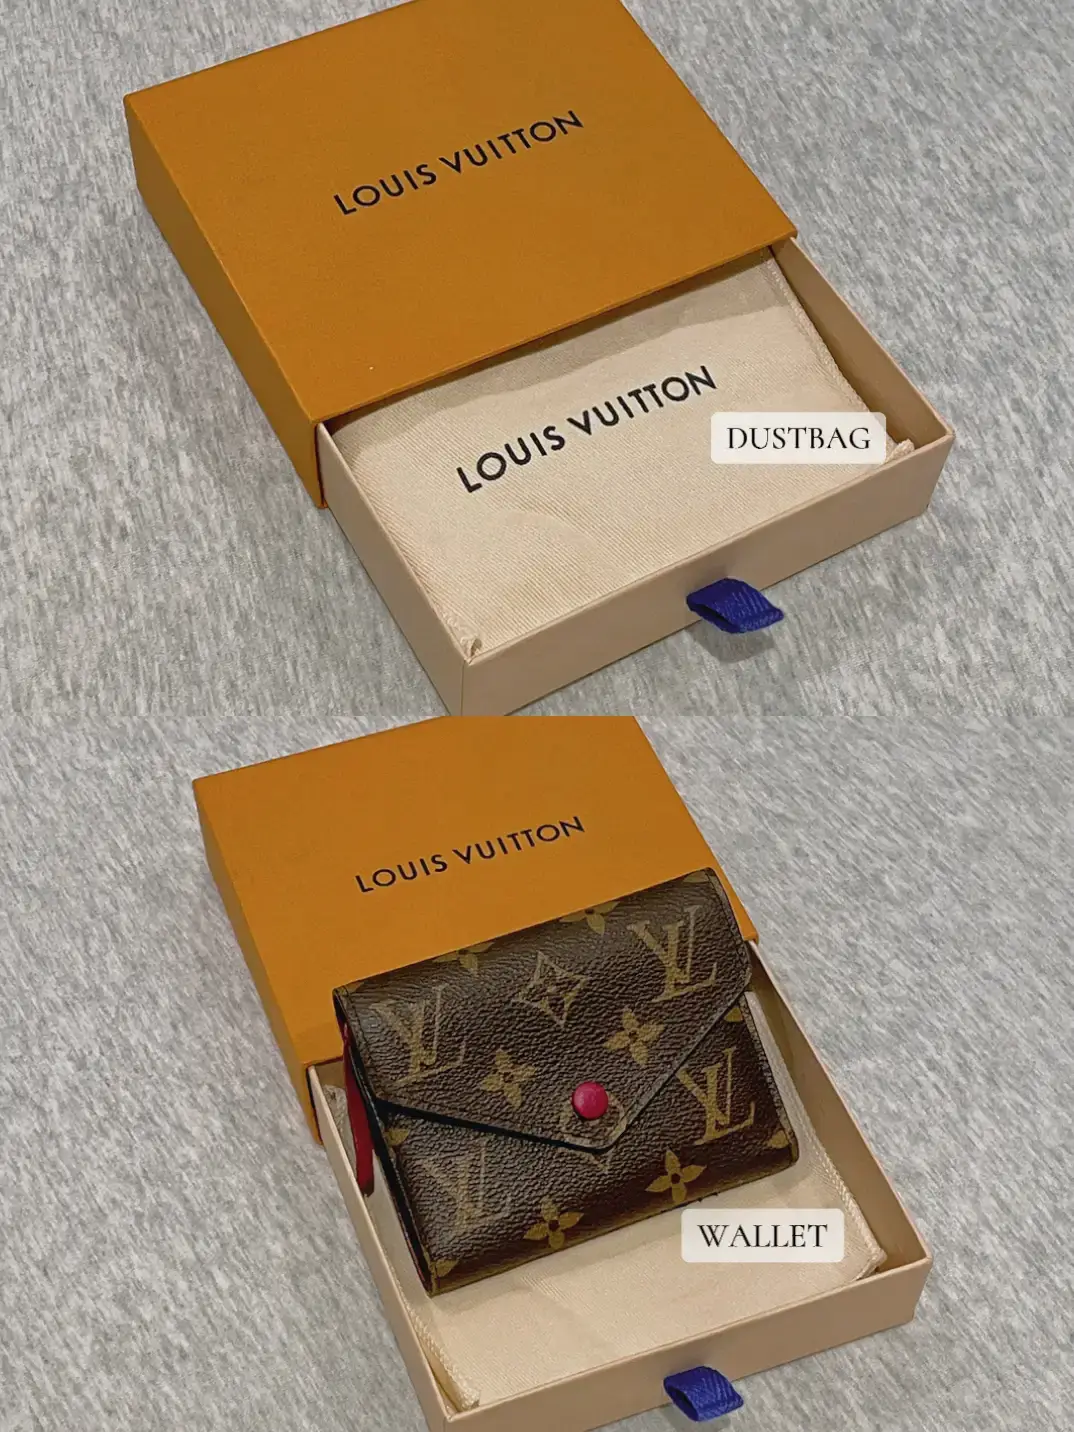 Louis Vuitton wallet dustbag  Louis vuitton wallet, Louis vuitton